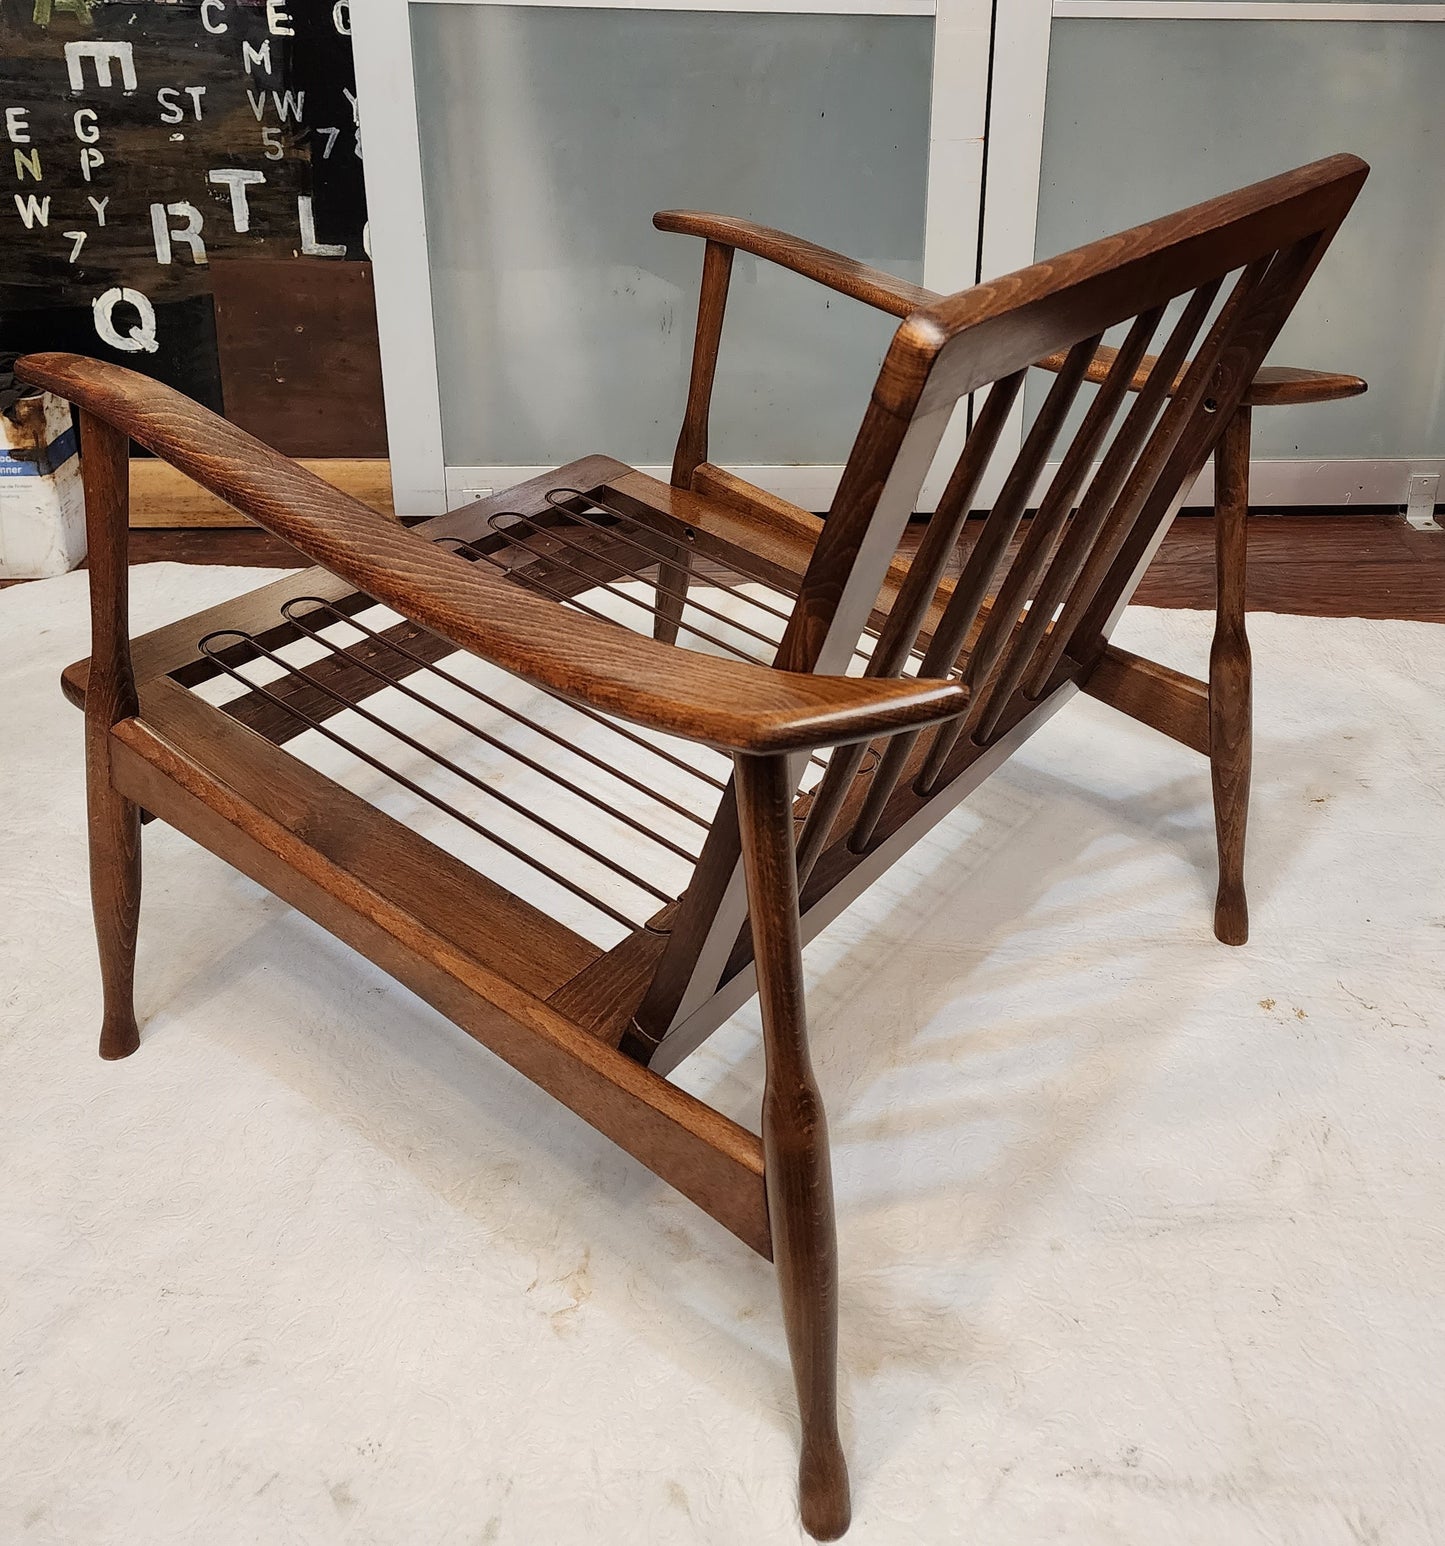 REFINISHED Danish Mid-Century Modern Lounge Chair